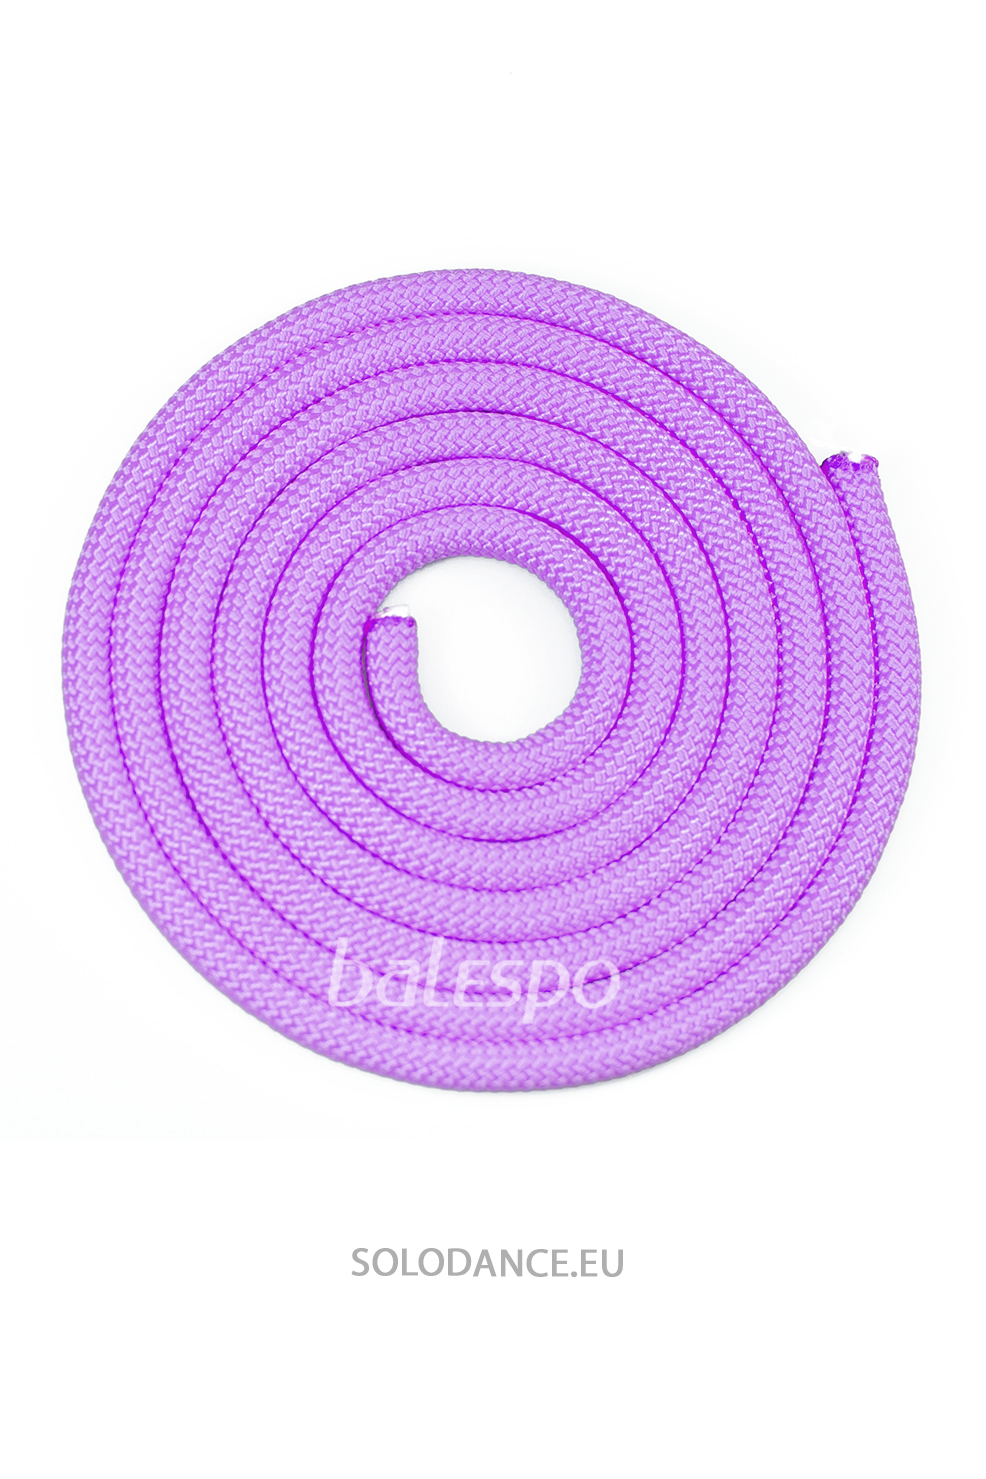 Gymnastic rope BALESPO lilac 2,5 m